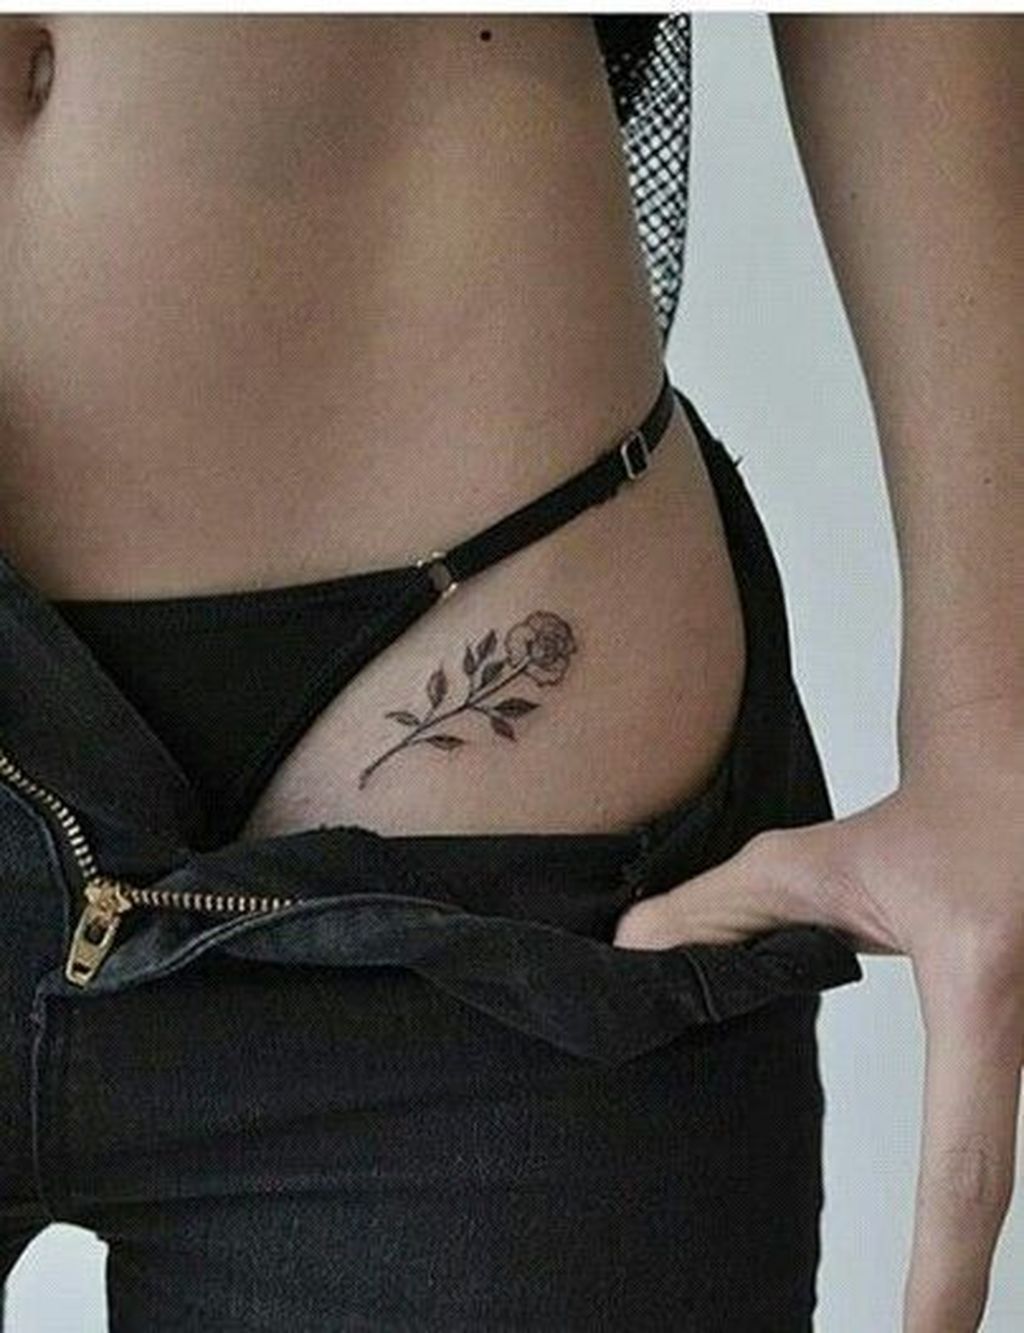 Female Wrist Tattoo Ideas Small Designs (22)